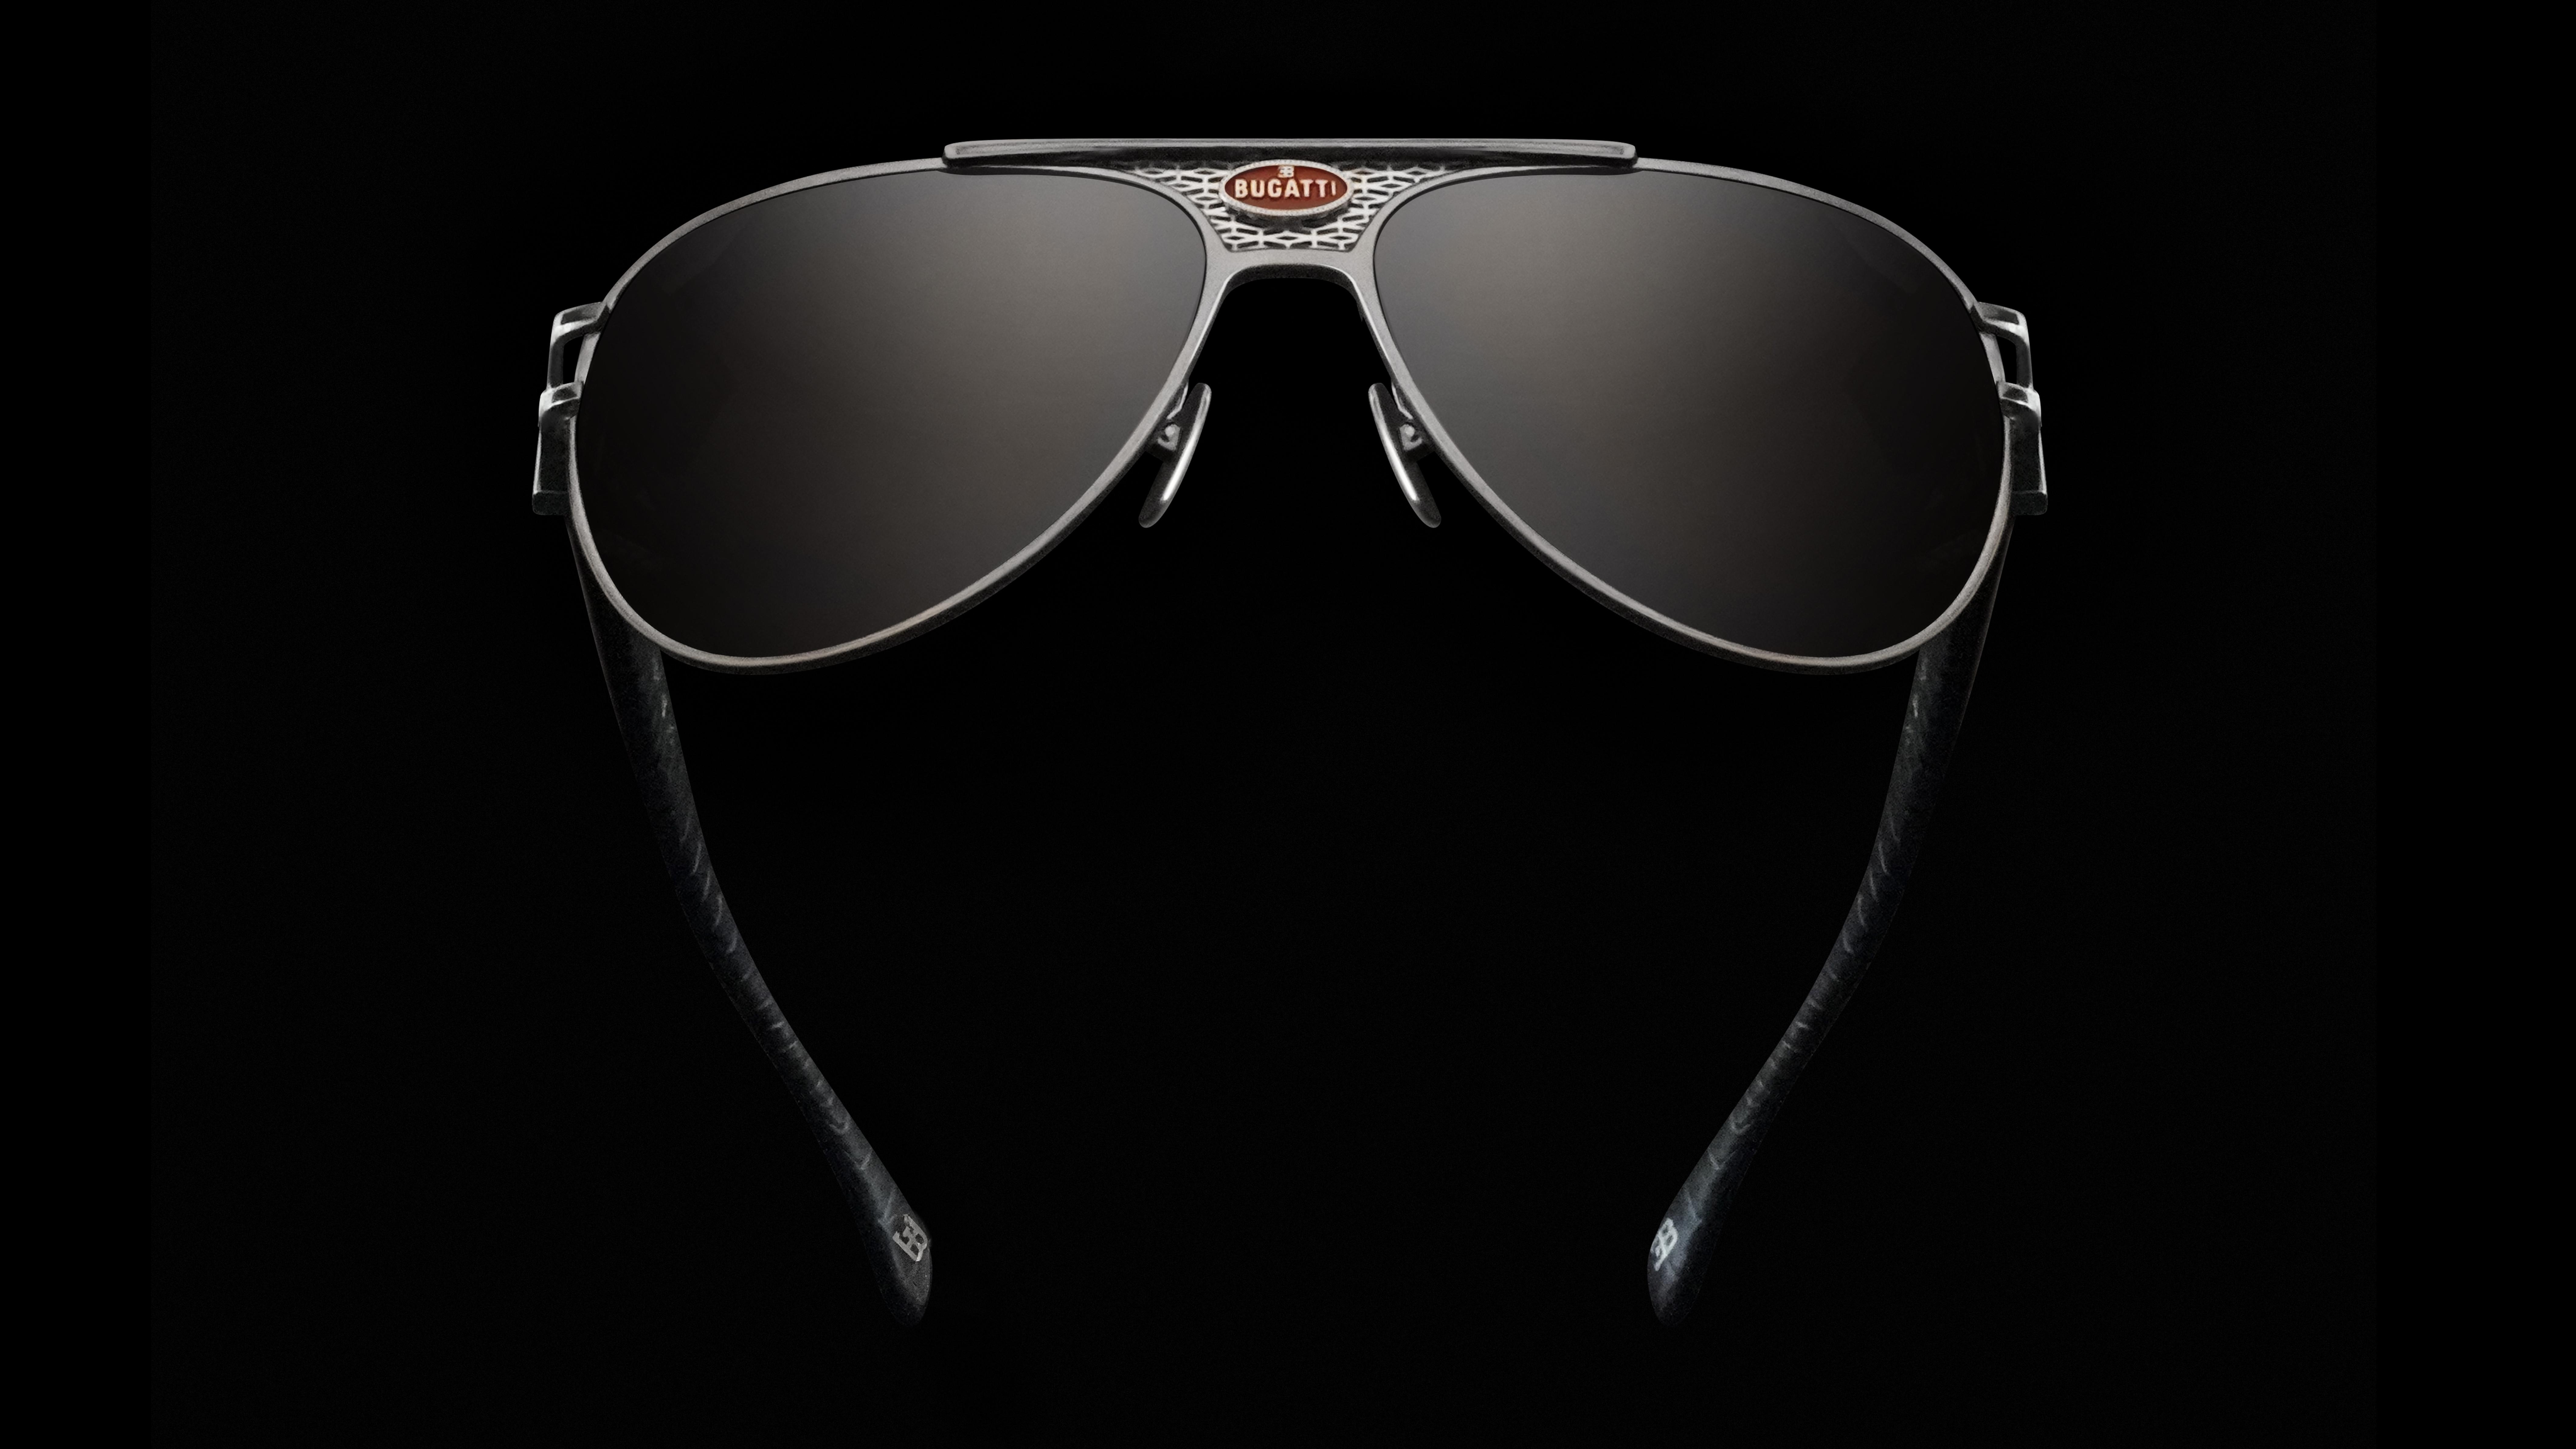 Bugatti and legendary designer Newsroom Larry optical the Bugatti eyewear launch Sands Bugatti – first-ever collection